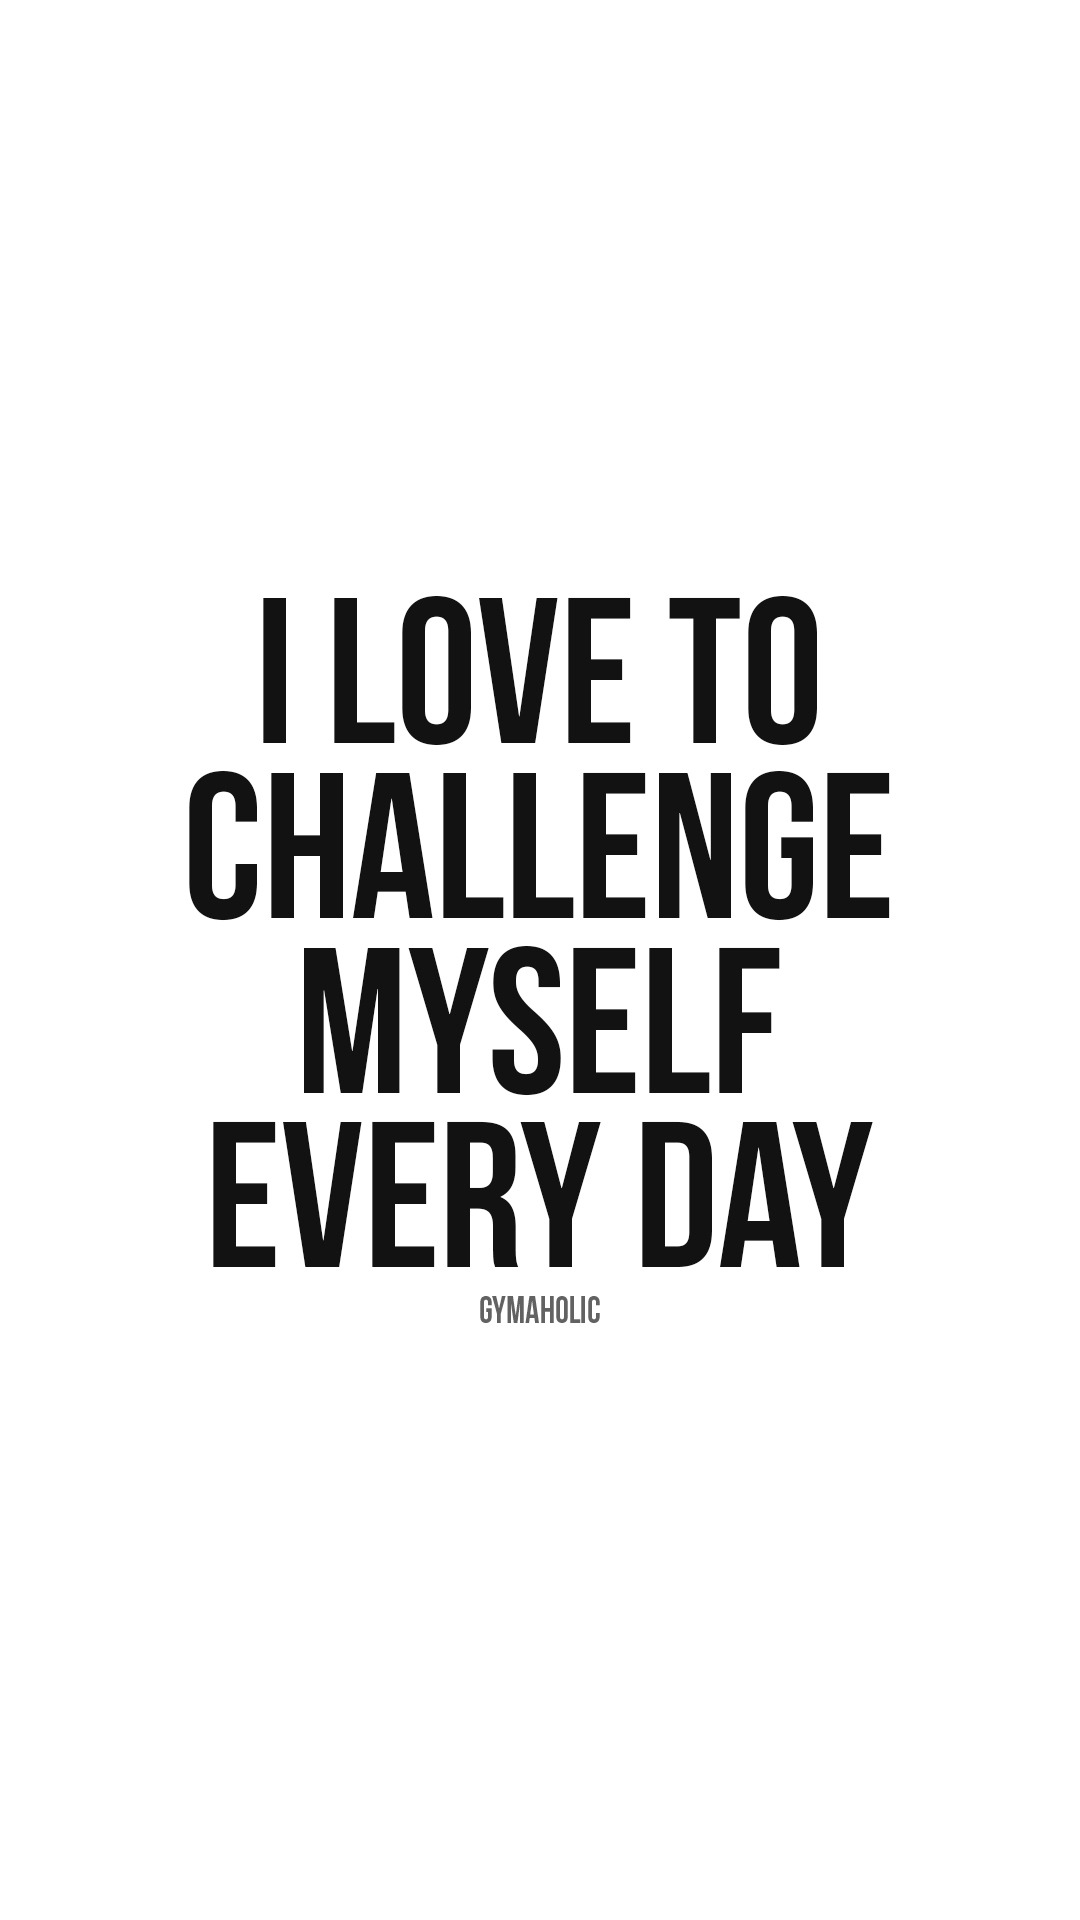 I love to challenge myself every day